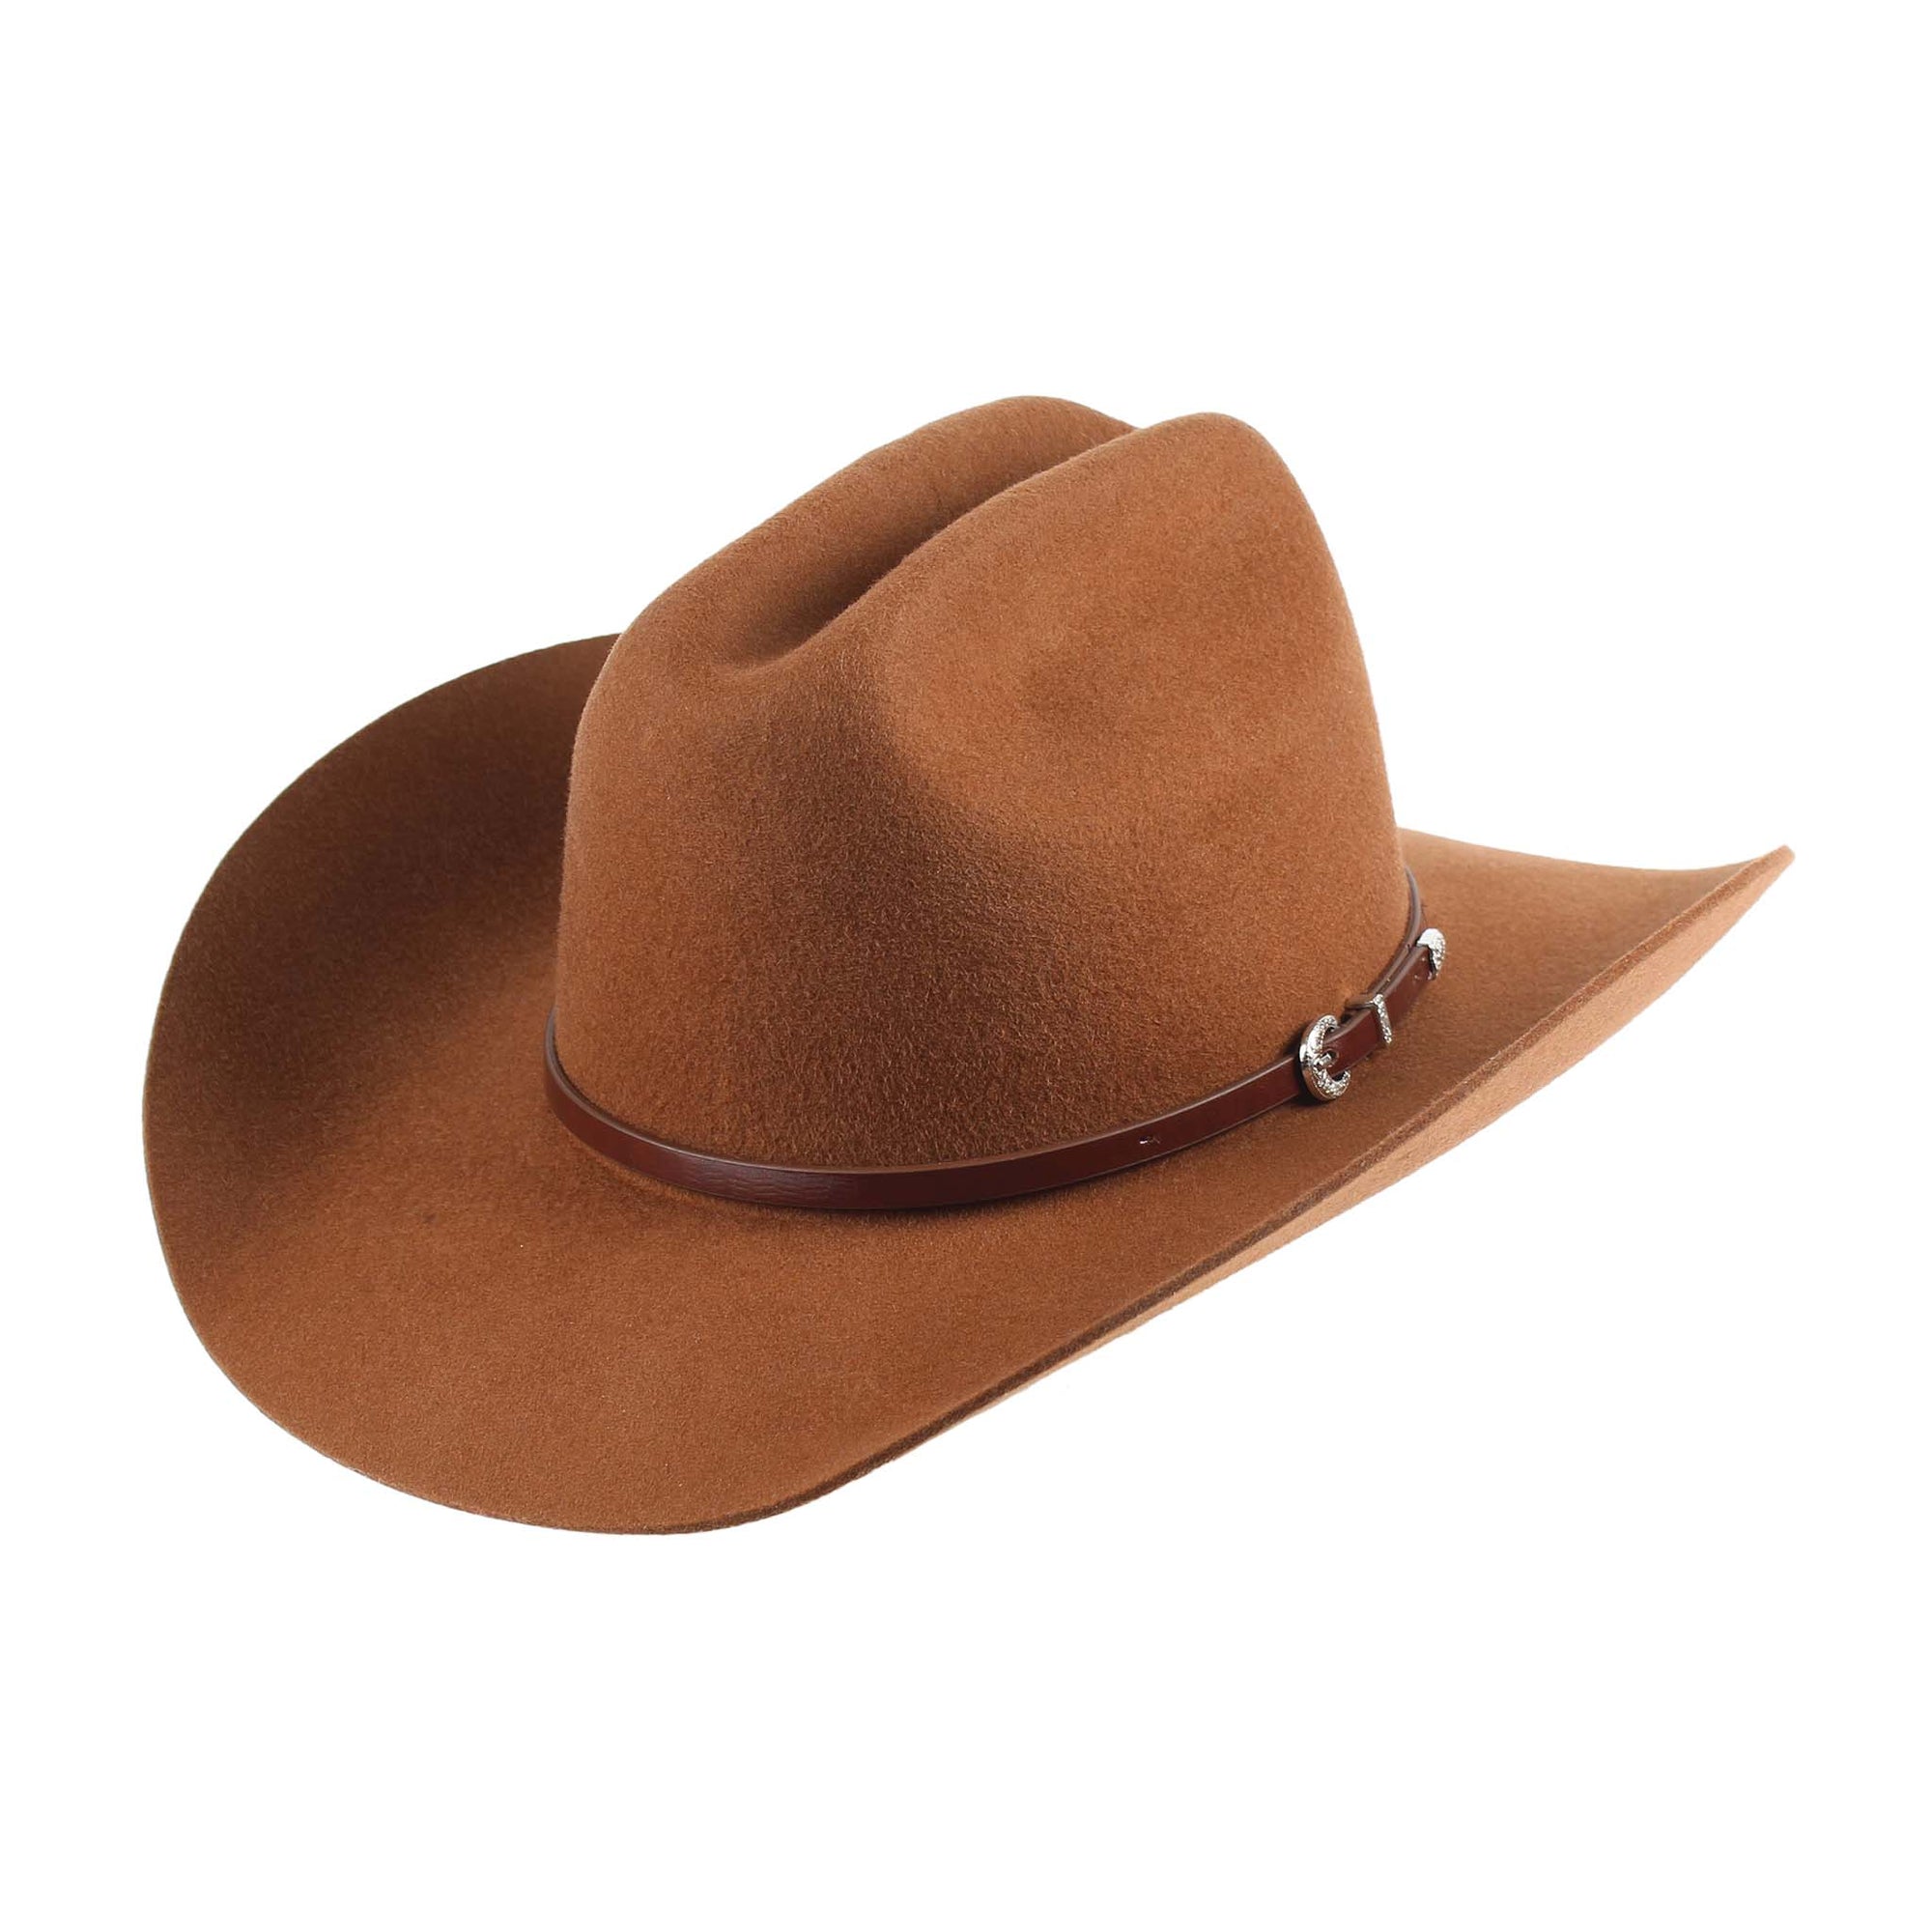 Cowboy Hat - Brown Felt with Narrow Buckle 7915